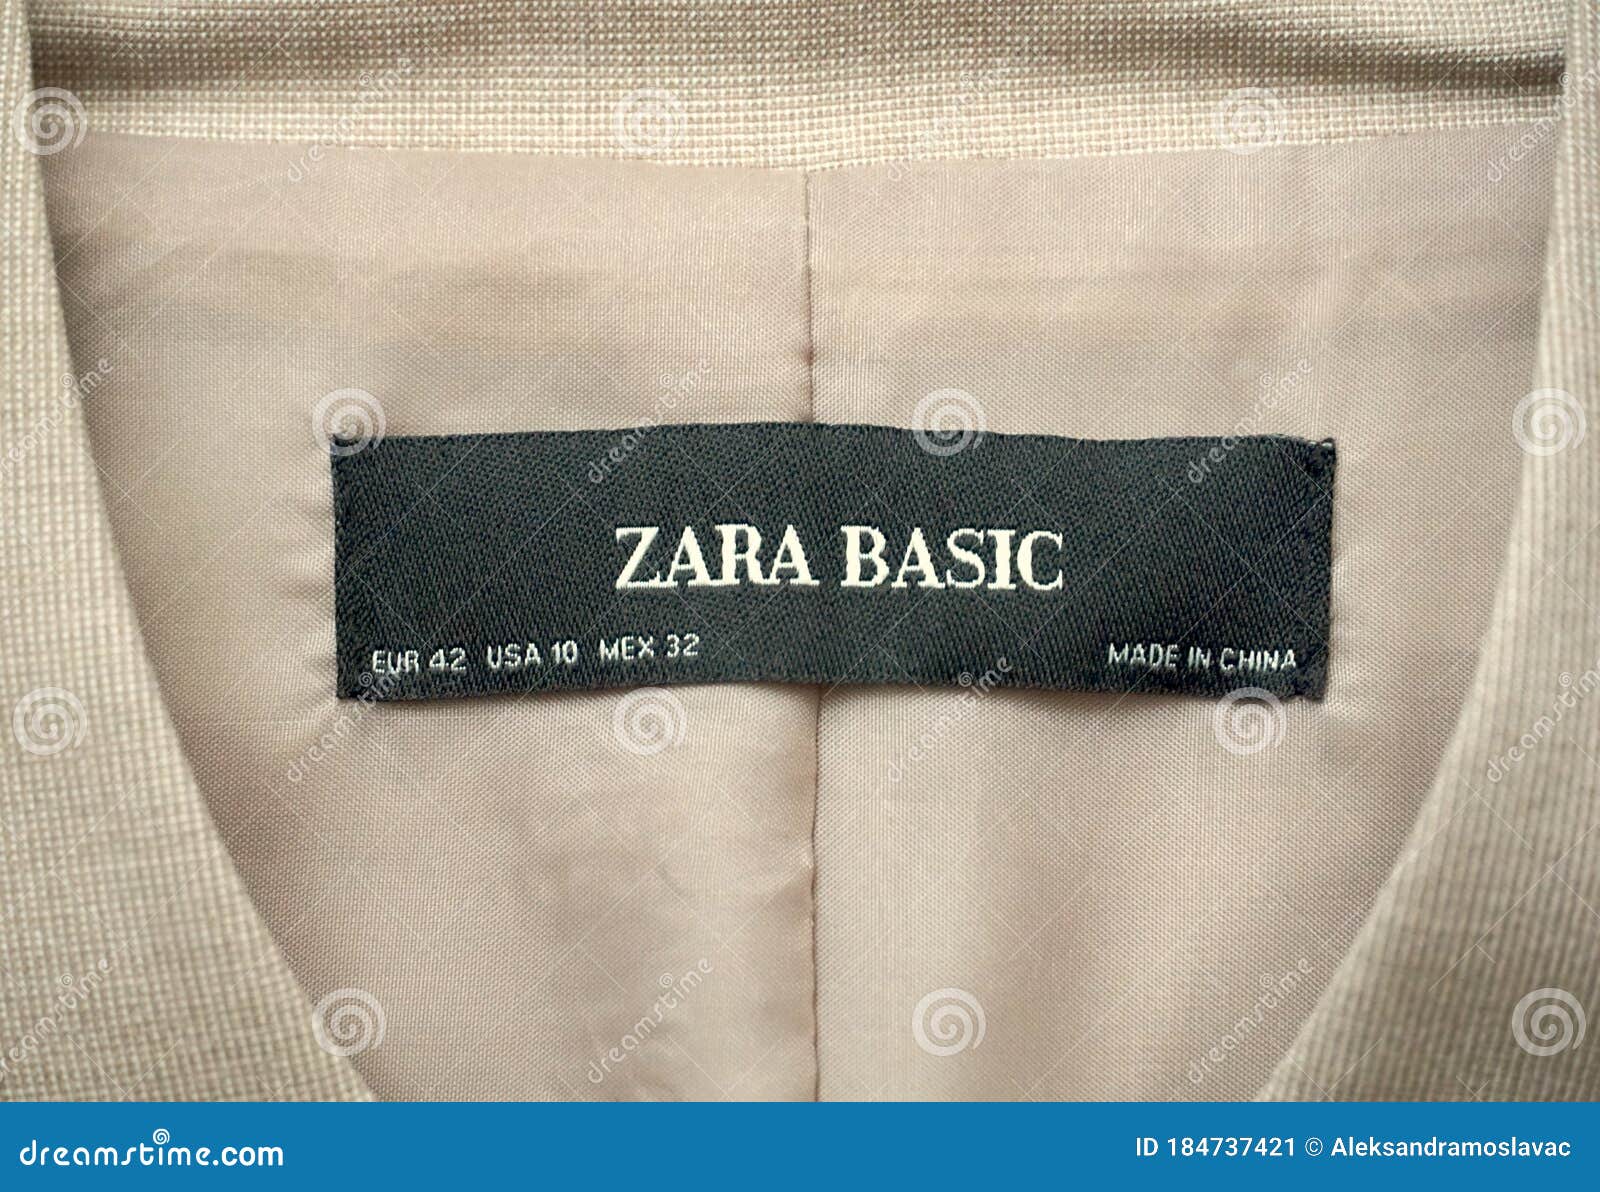 where is zara made